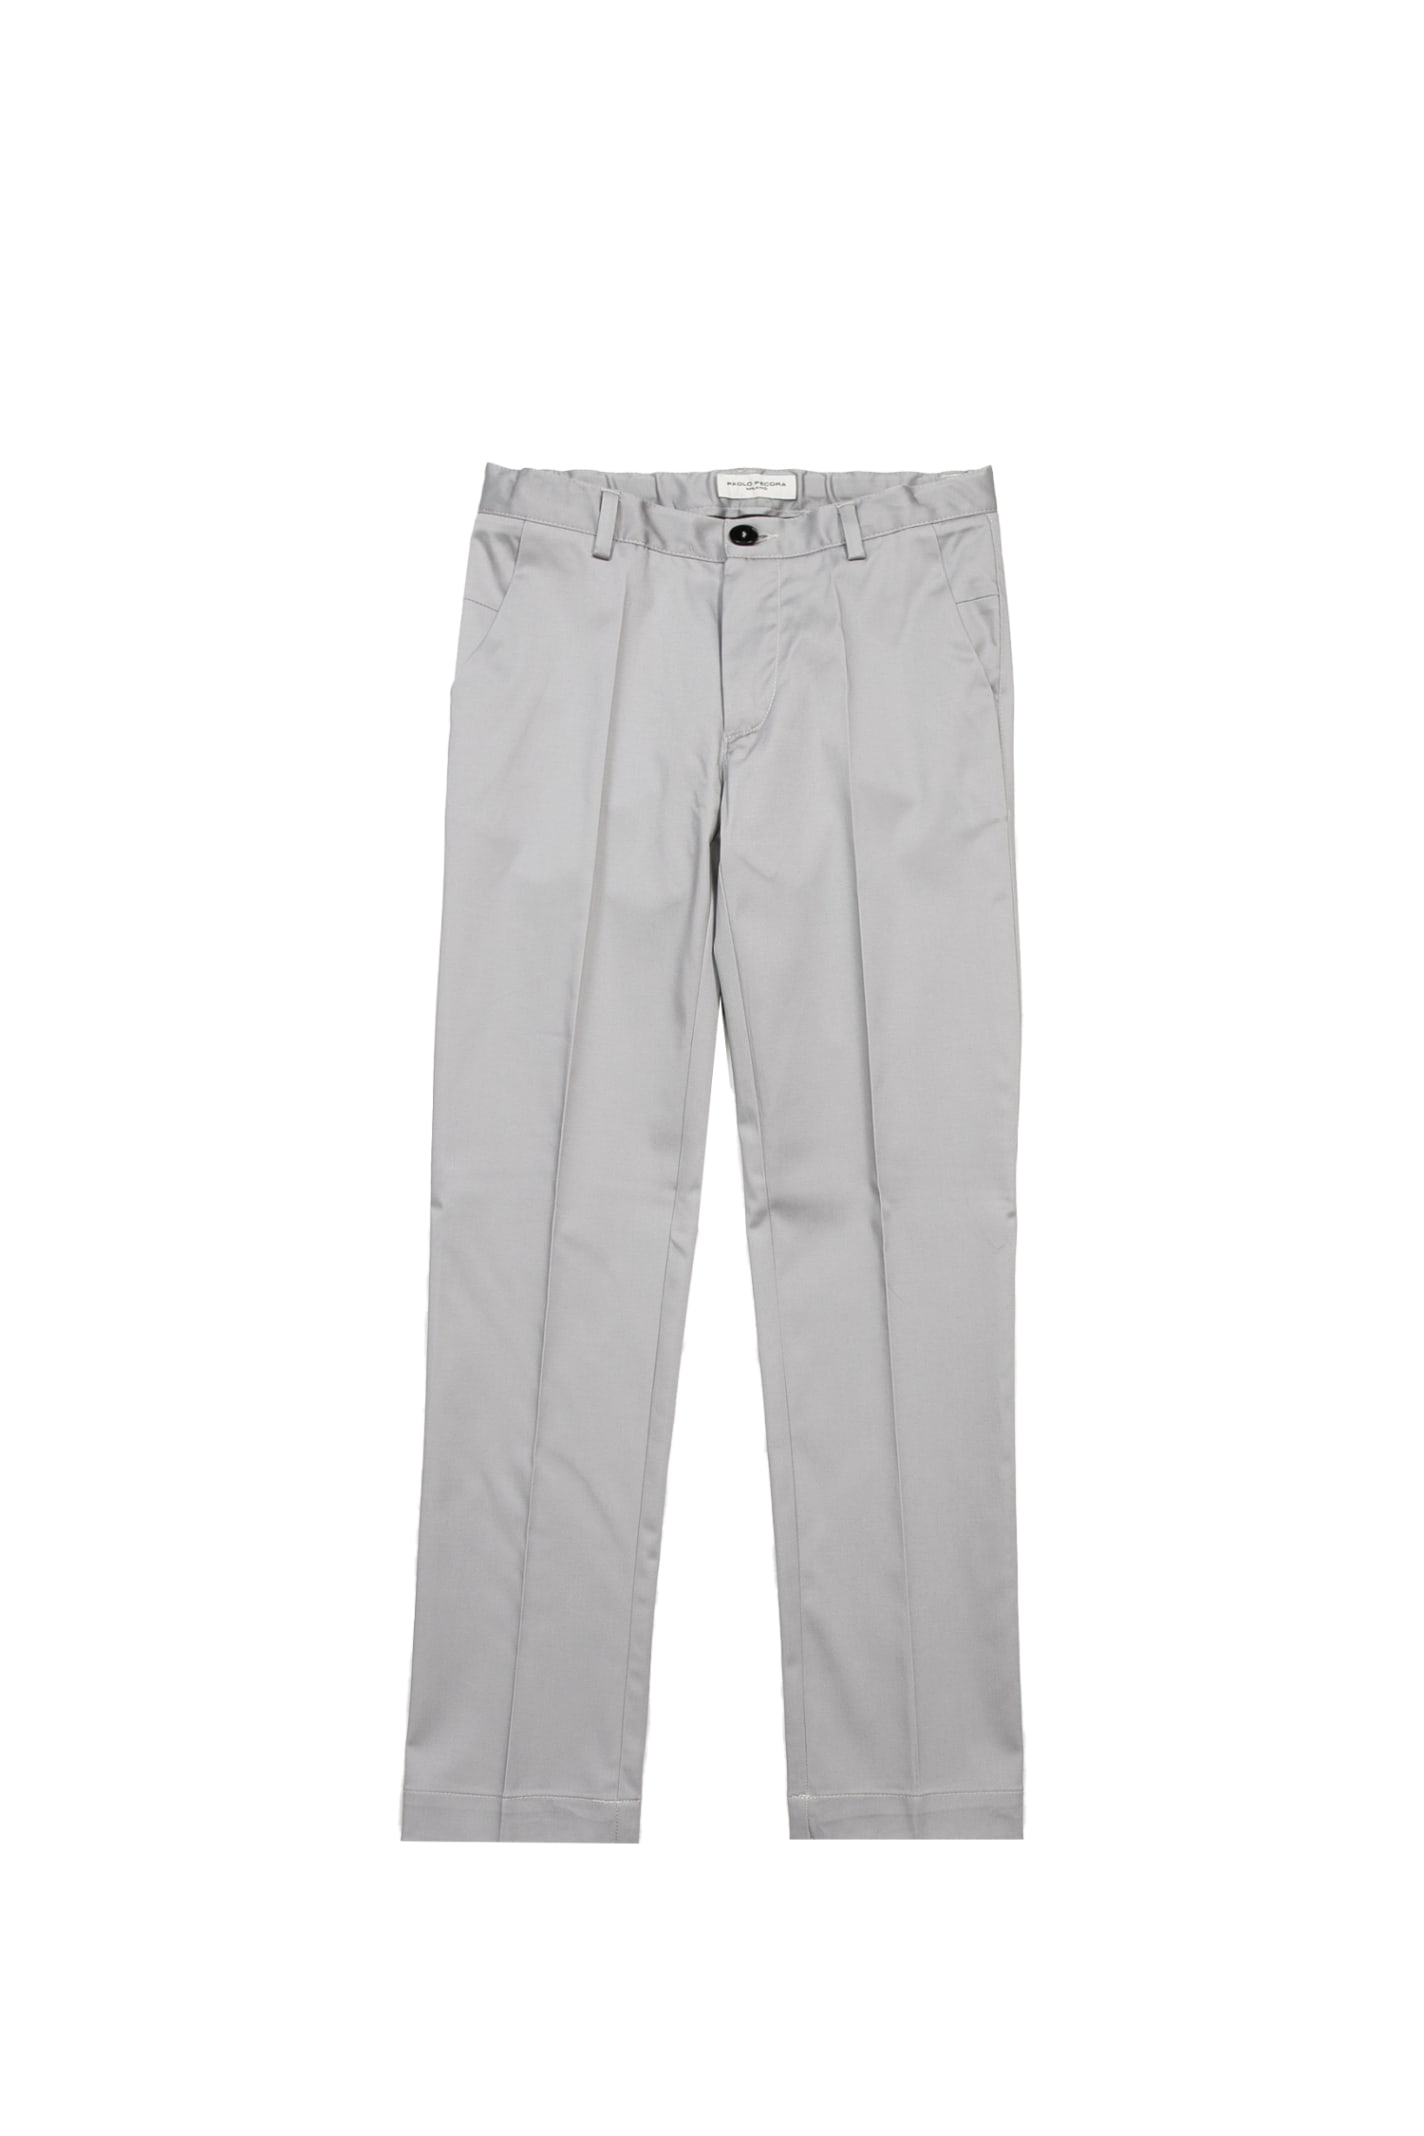 Paolo Pecora Kids' Cotton Pants In Grey